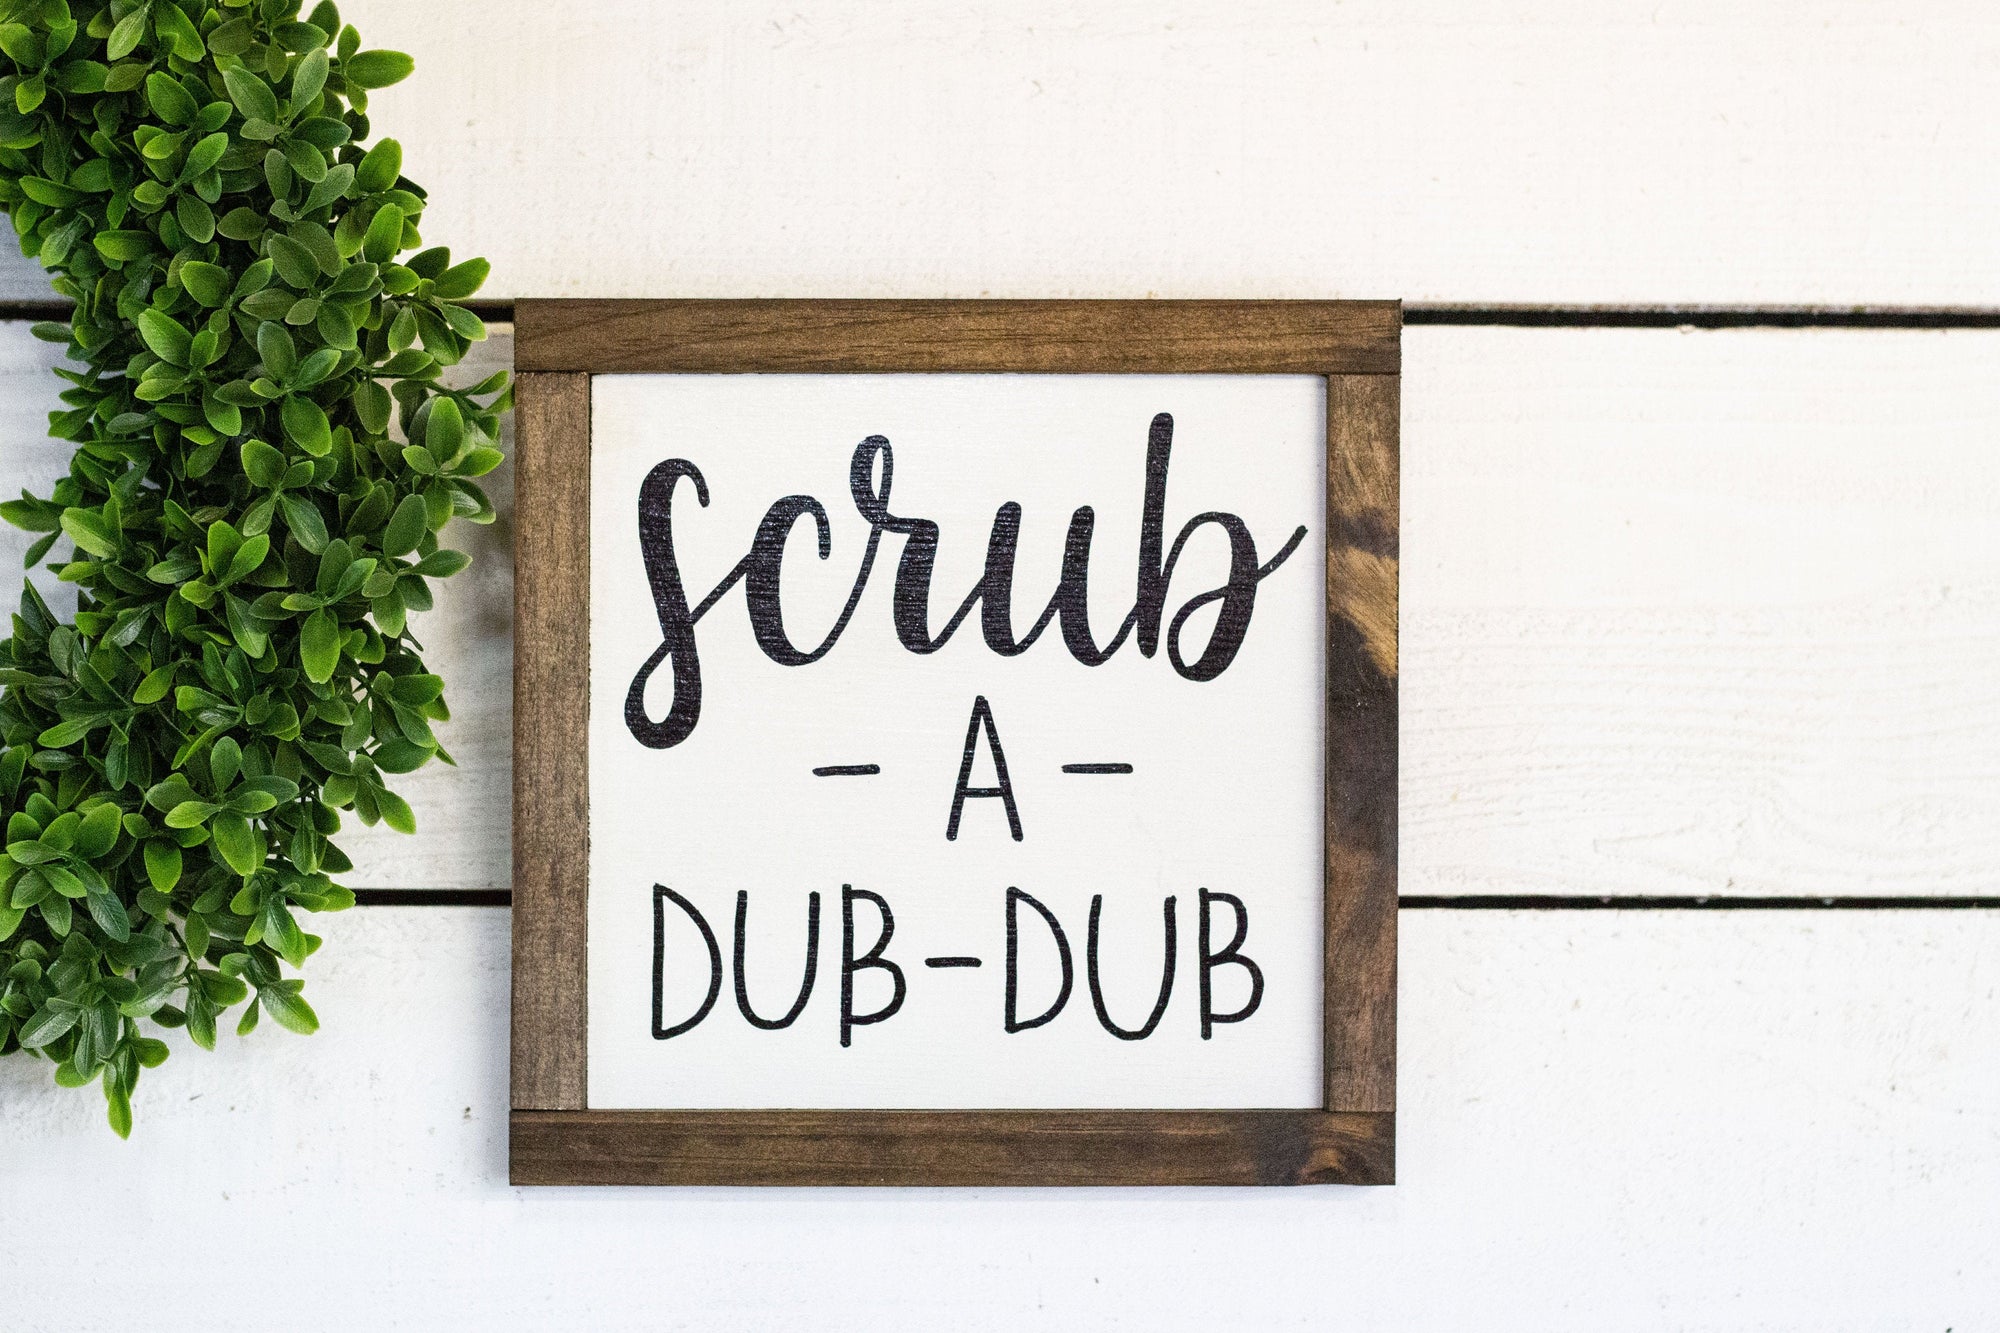 Scrub-a-dub-dub, square sign